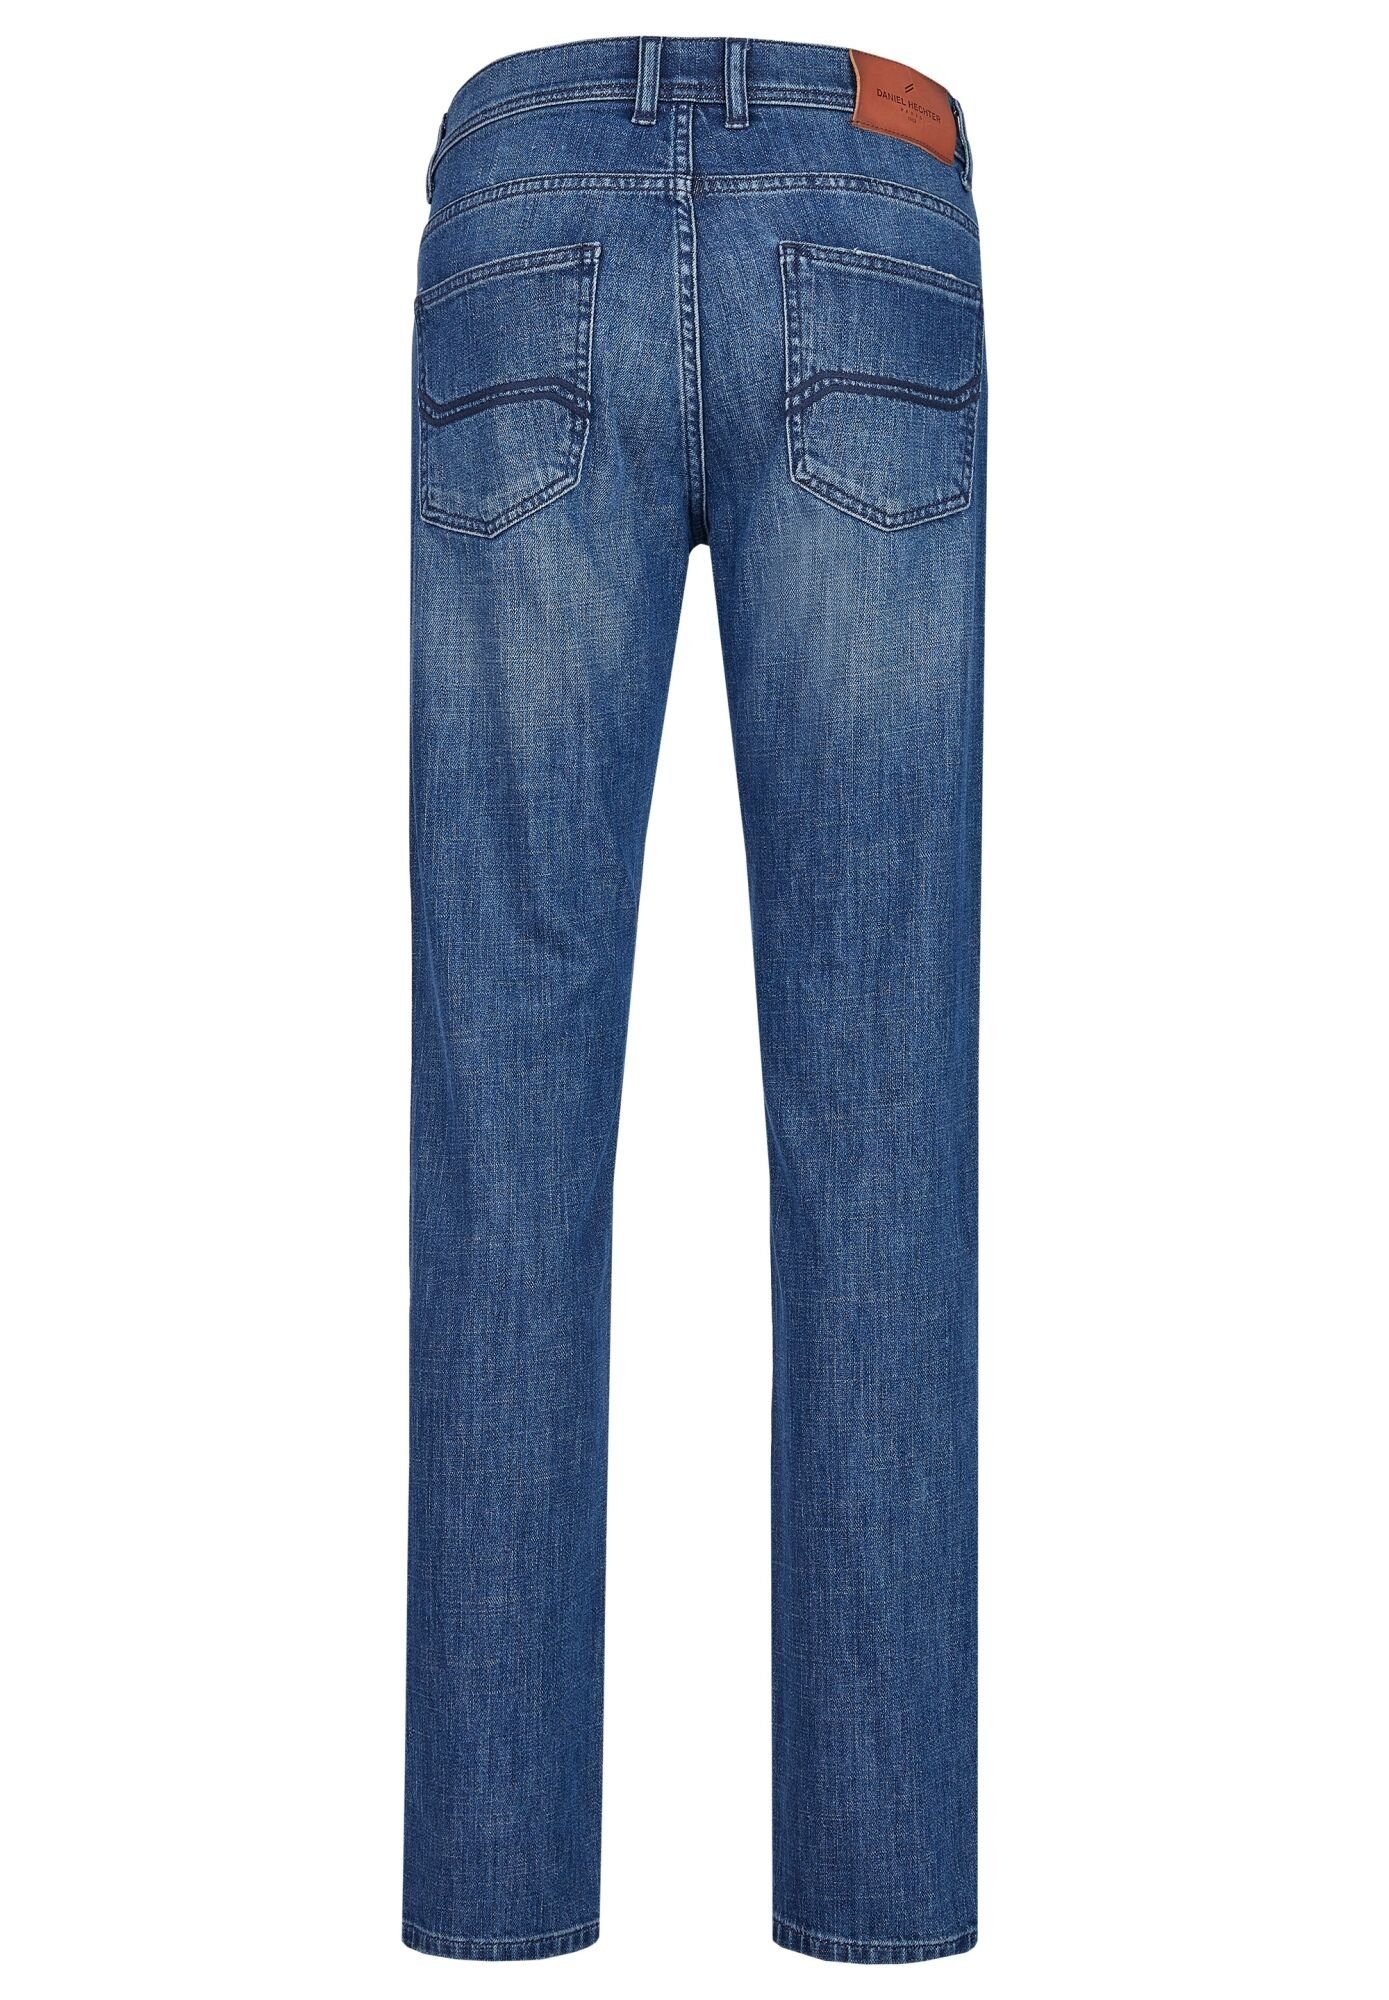 HECHTER PARIS Straight-Jeans im 5-Pocket-Style